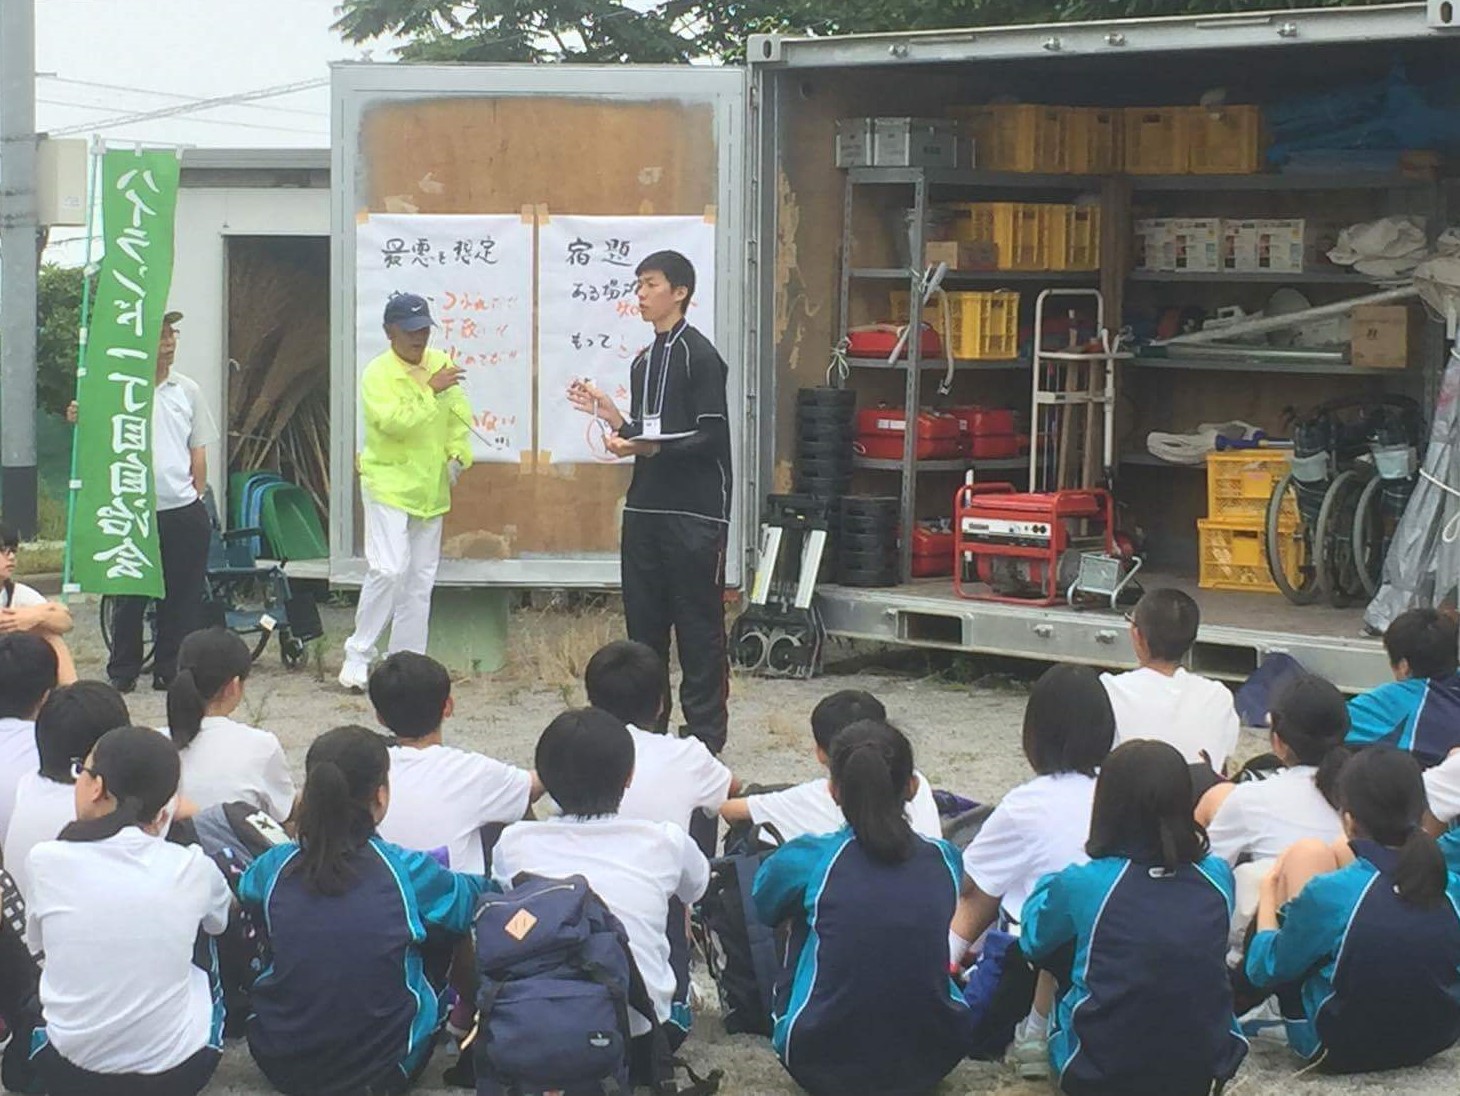 Chikara Takeoka speaks to students as part of the neighborhood council.